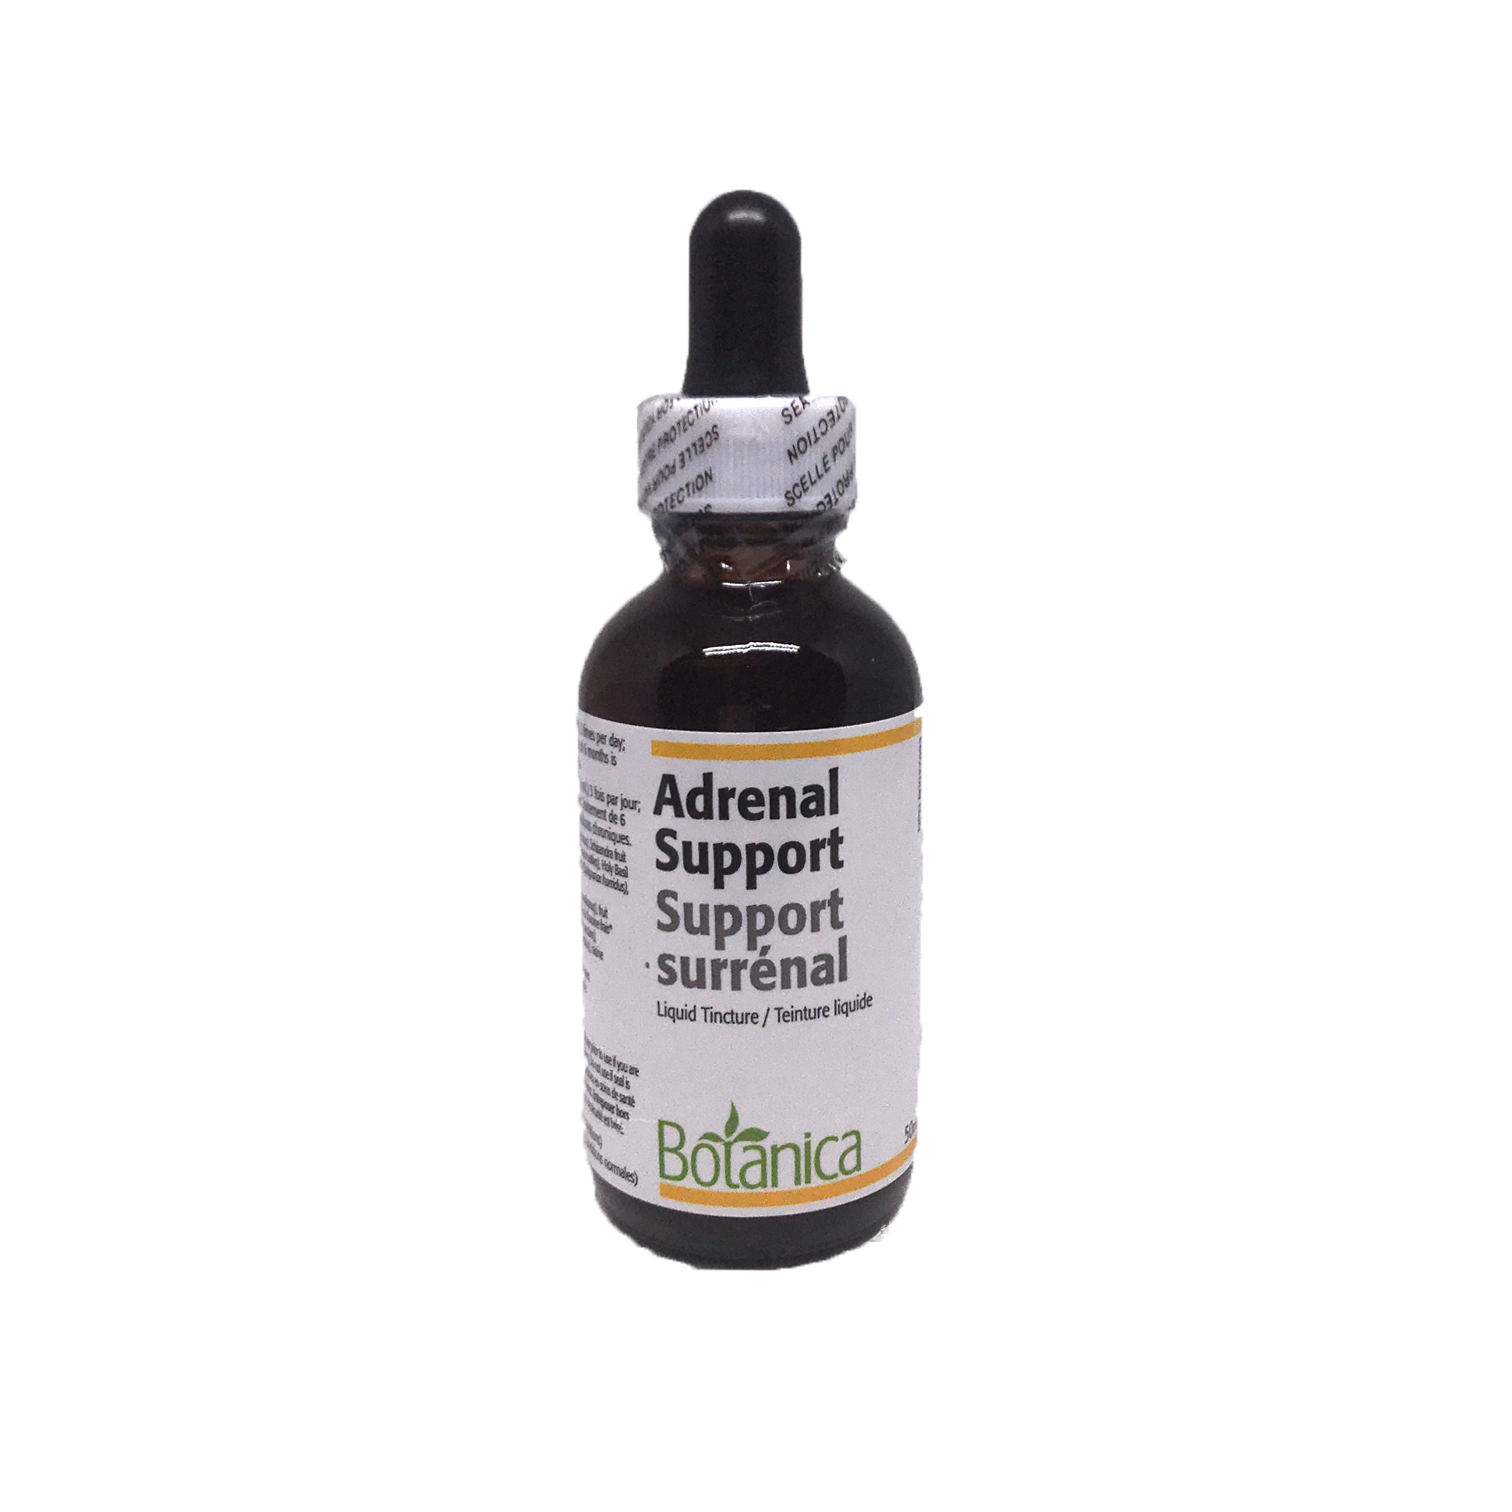 Botanica Adrenal Support Compound 50ml